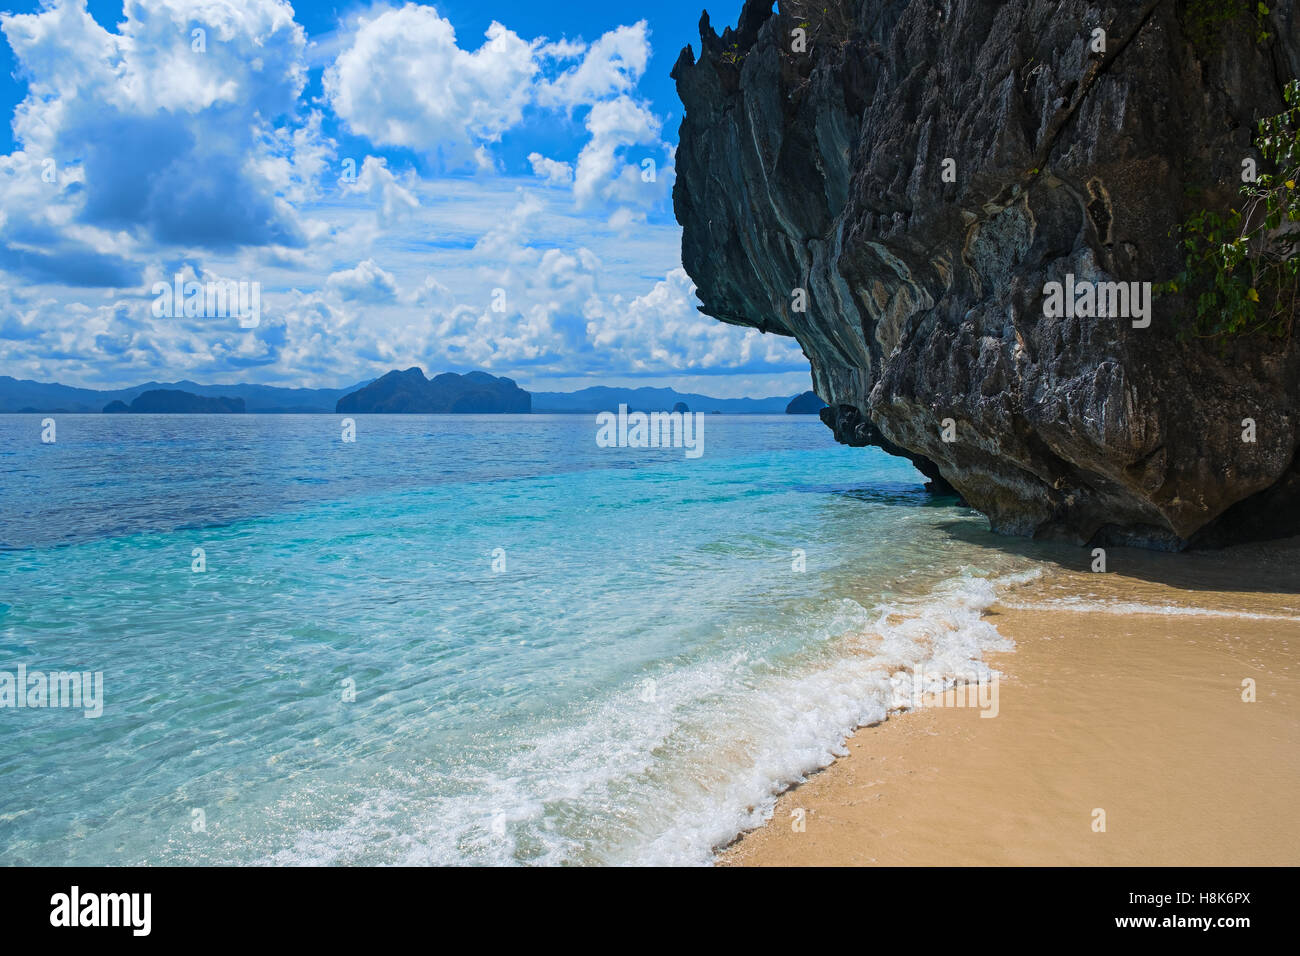 Beautiful tropical beach. Scenic landscape with sandy beach sea and mountain island, El Nido, Palawan, Philippines, Asia Stock Photo